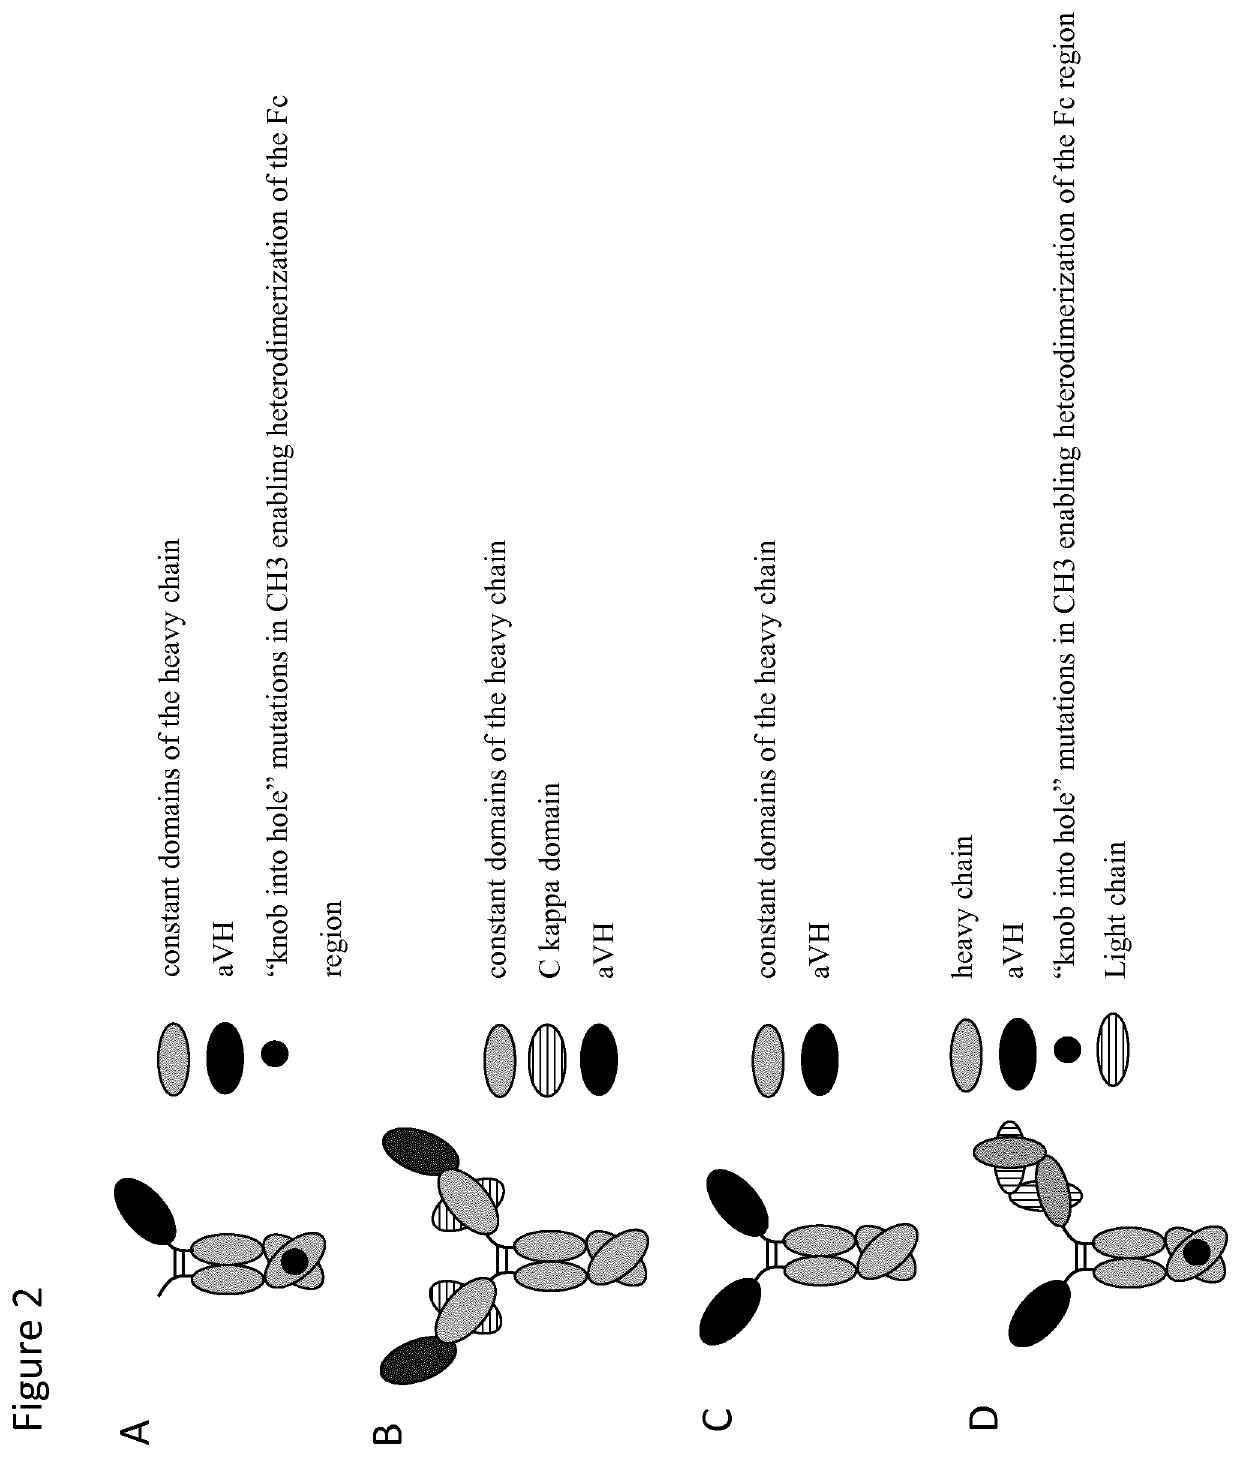 Bispecific antibodies comprising an antigen-binding site binding to lag3